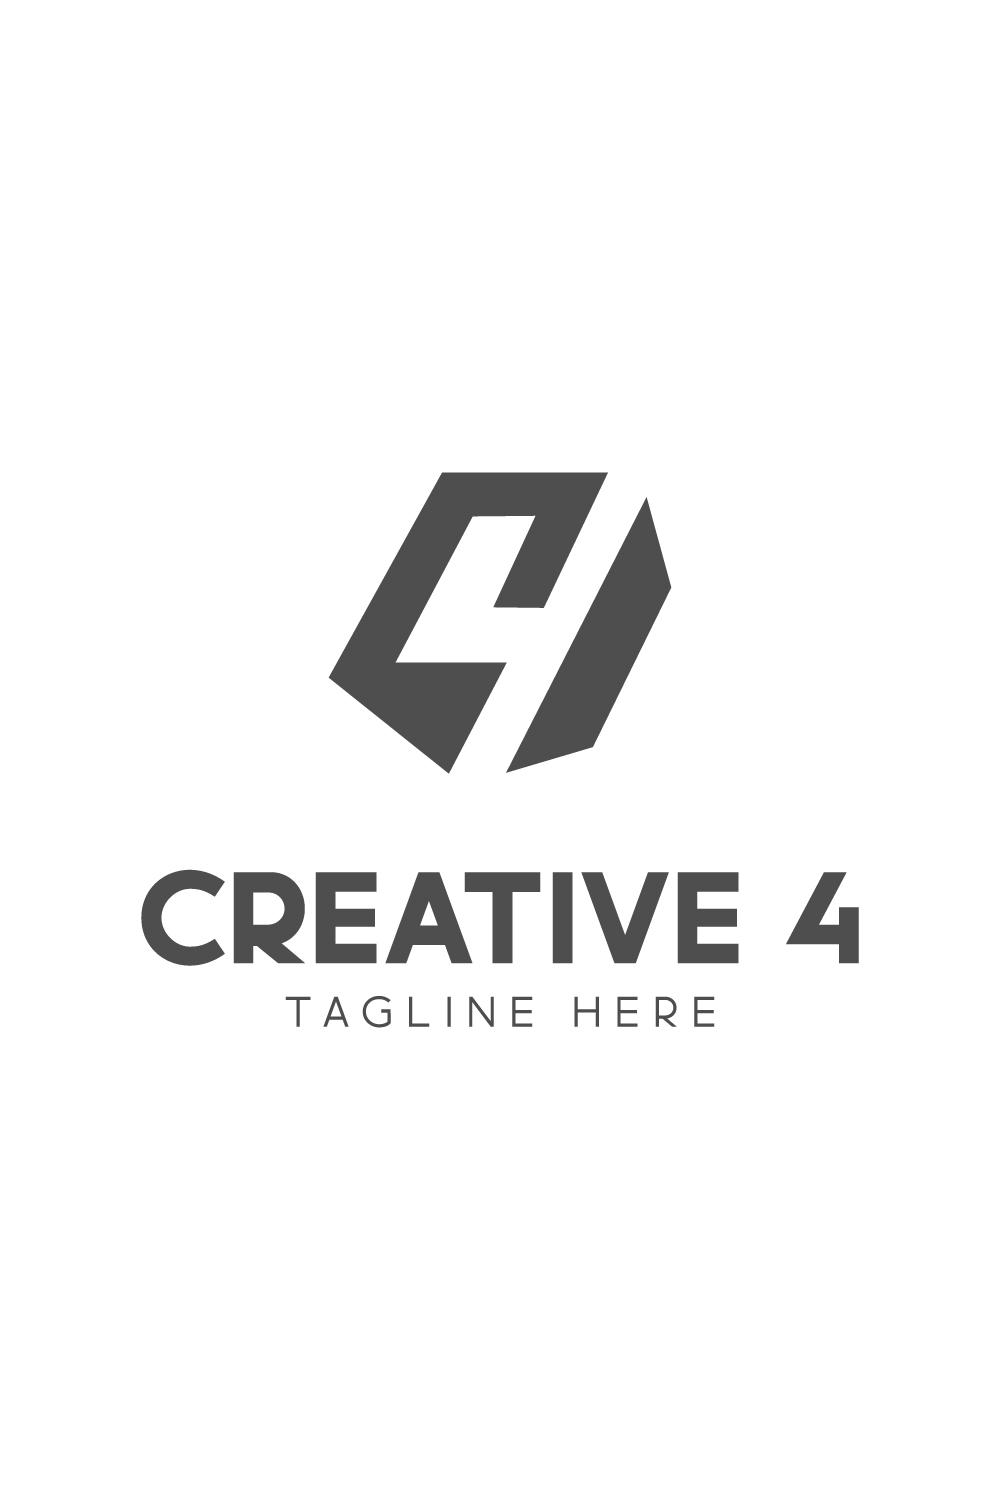 Creative 4 Logo pinterest preview image.